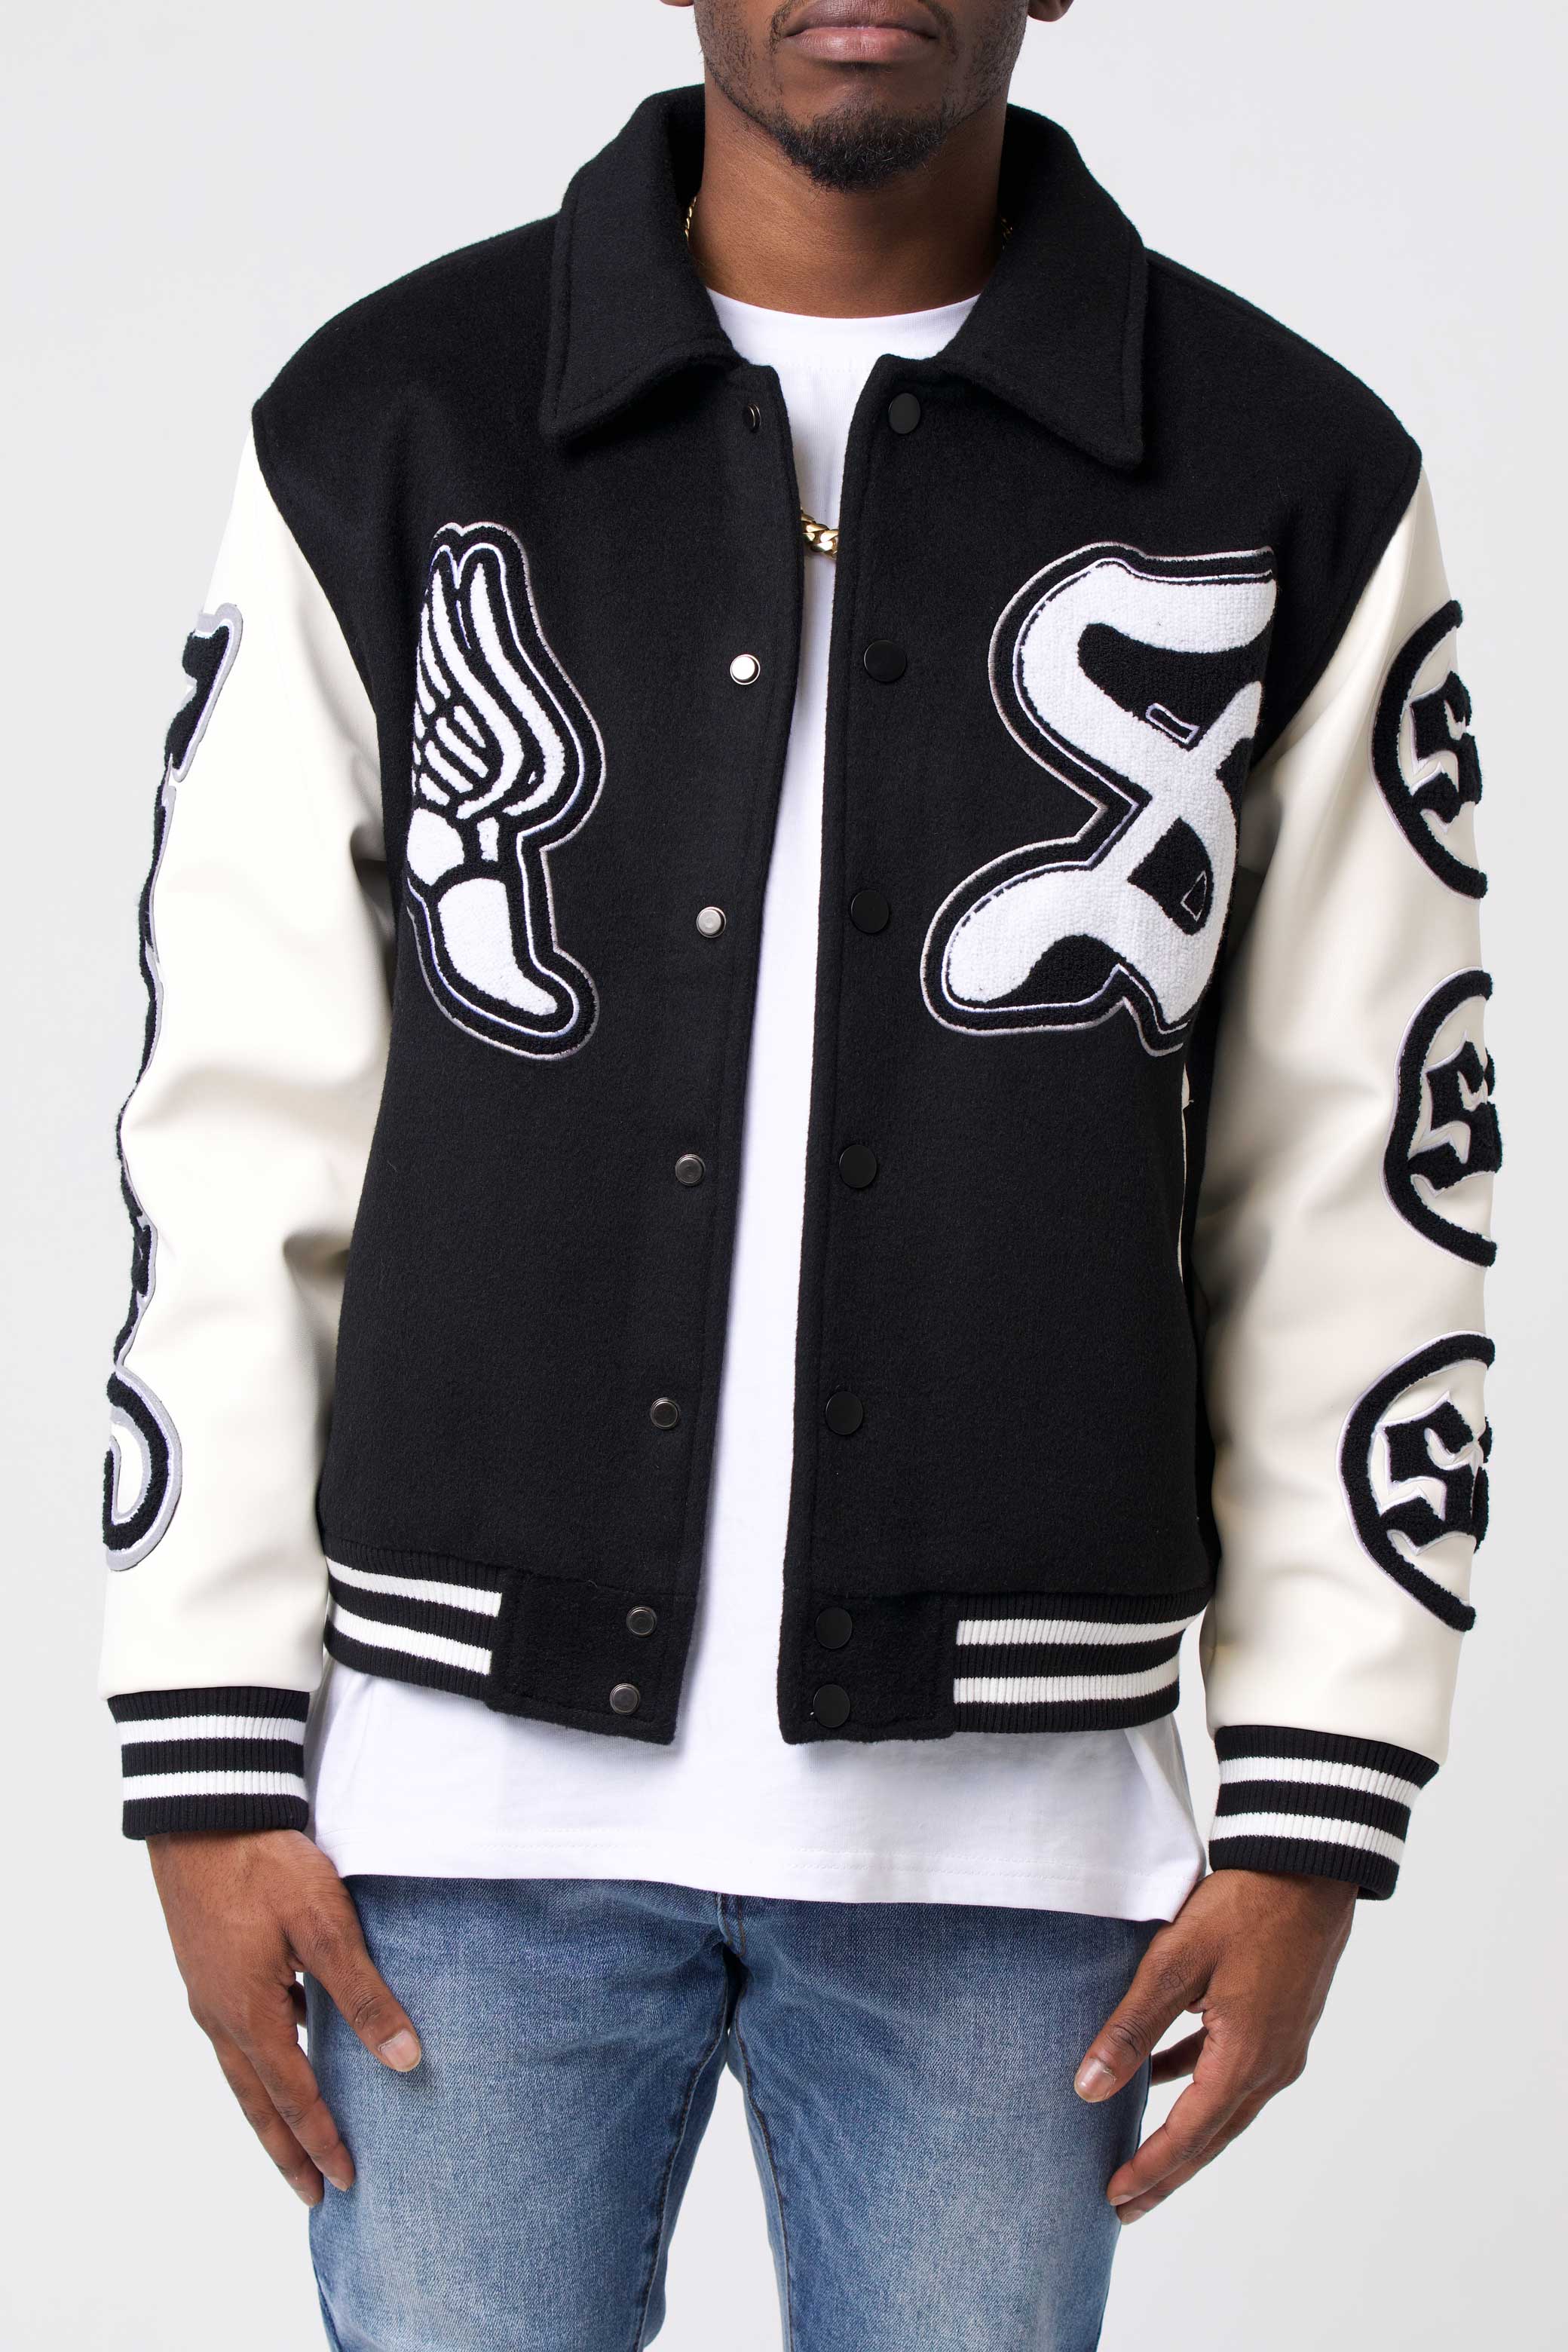 Syndicate Hermès Varsity Jacket – Syndicate Streetwear MIA